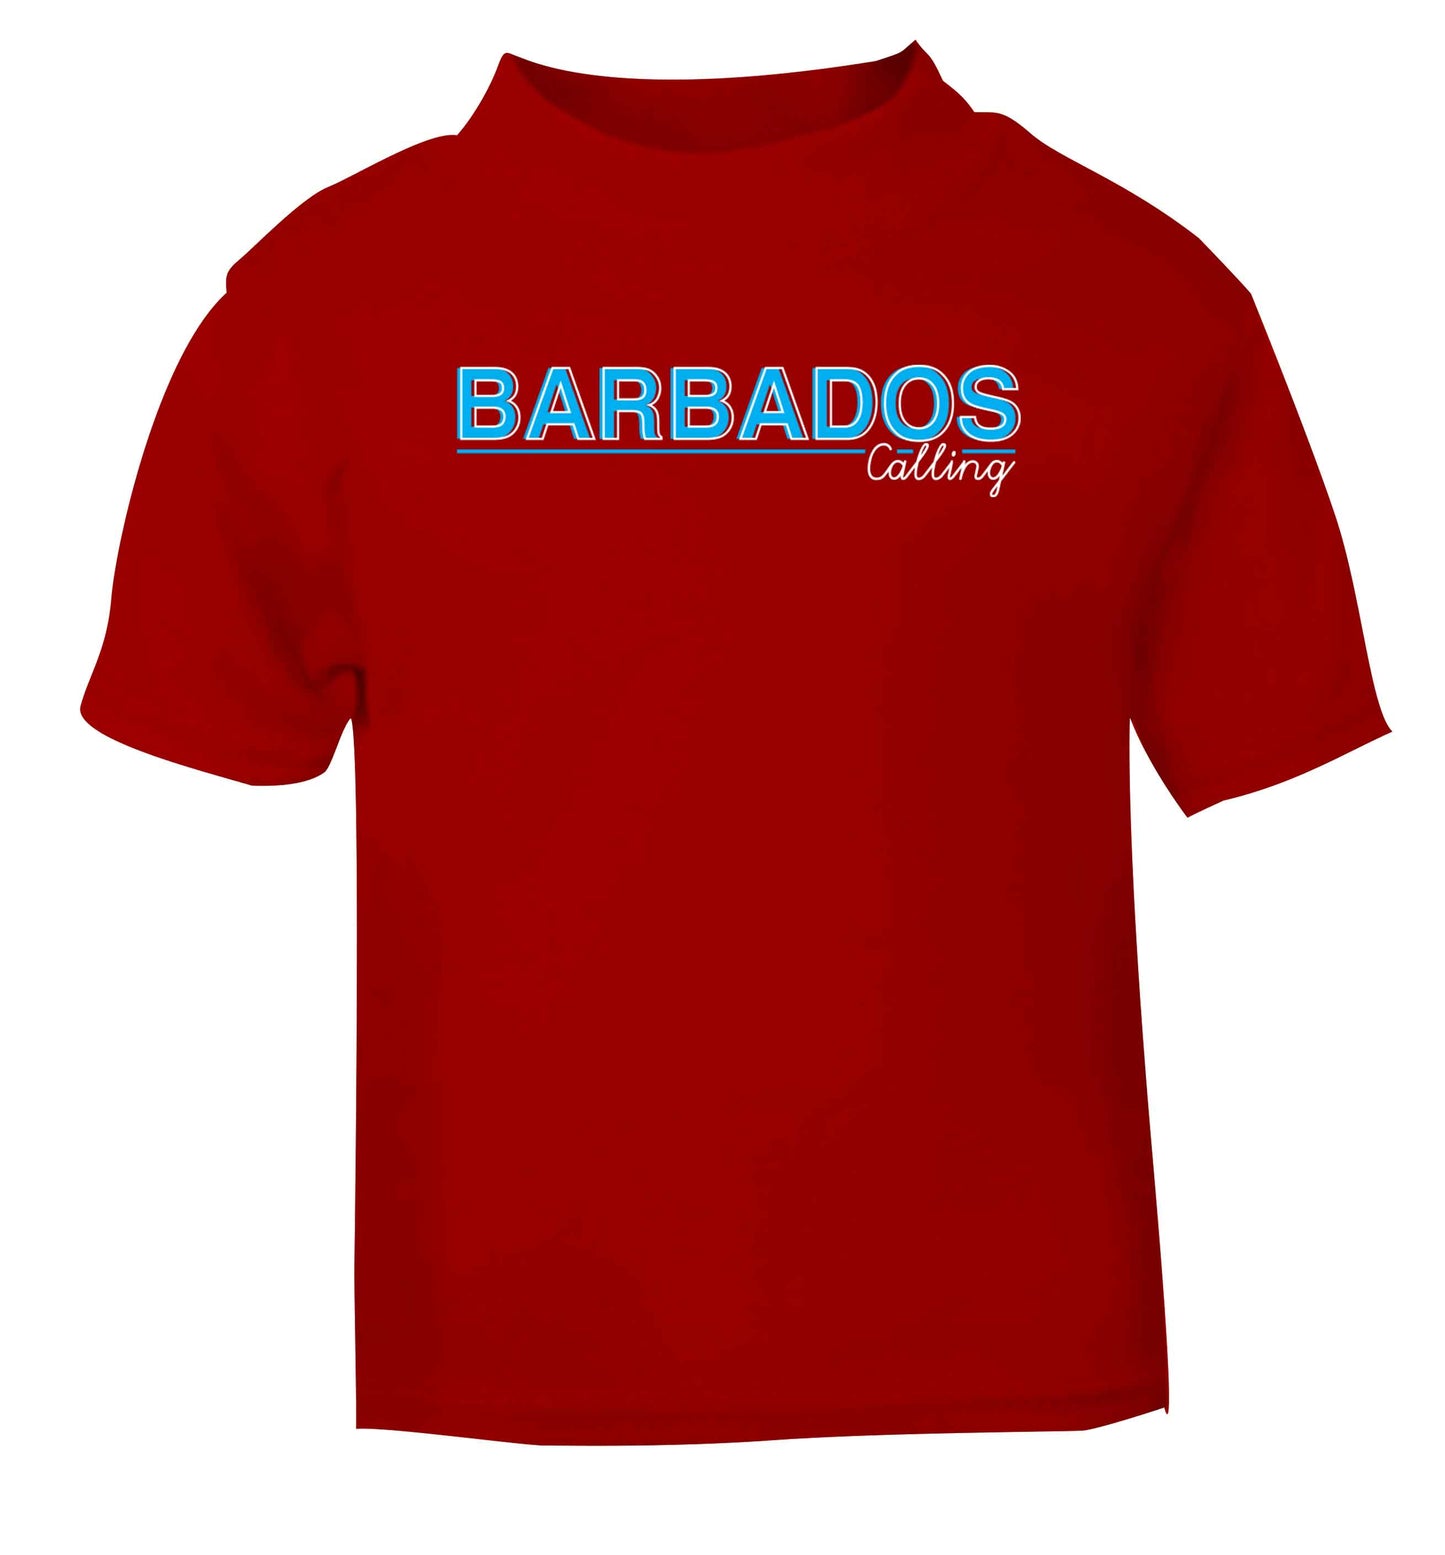 Barbados calling red Baby Toddler Tshirt 2 Years